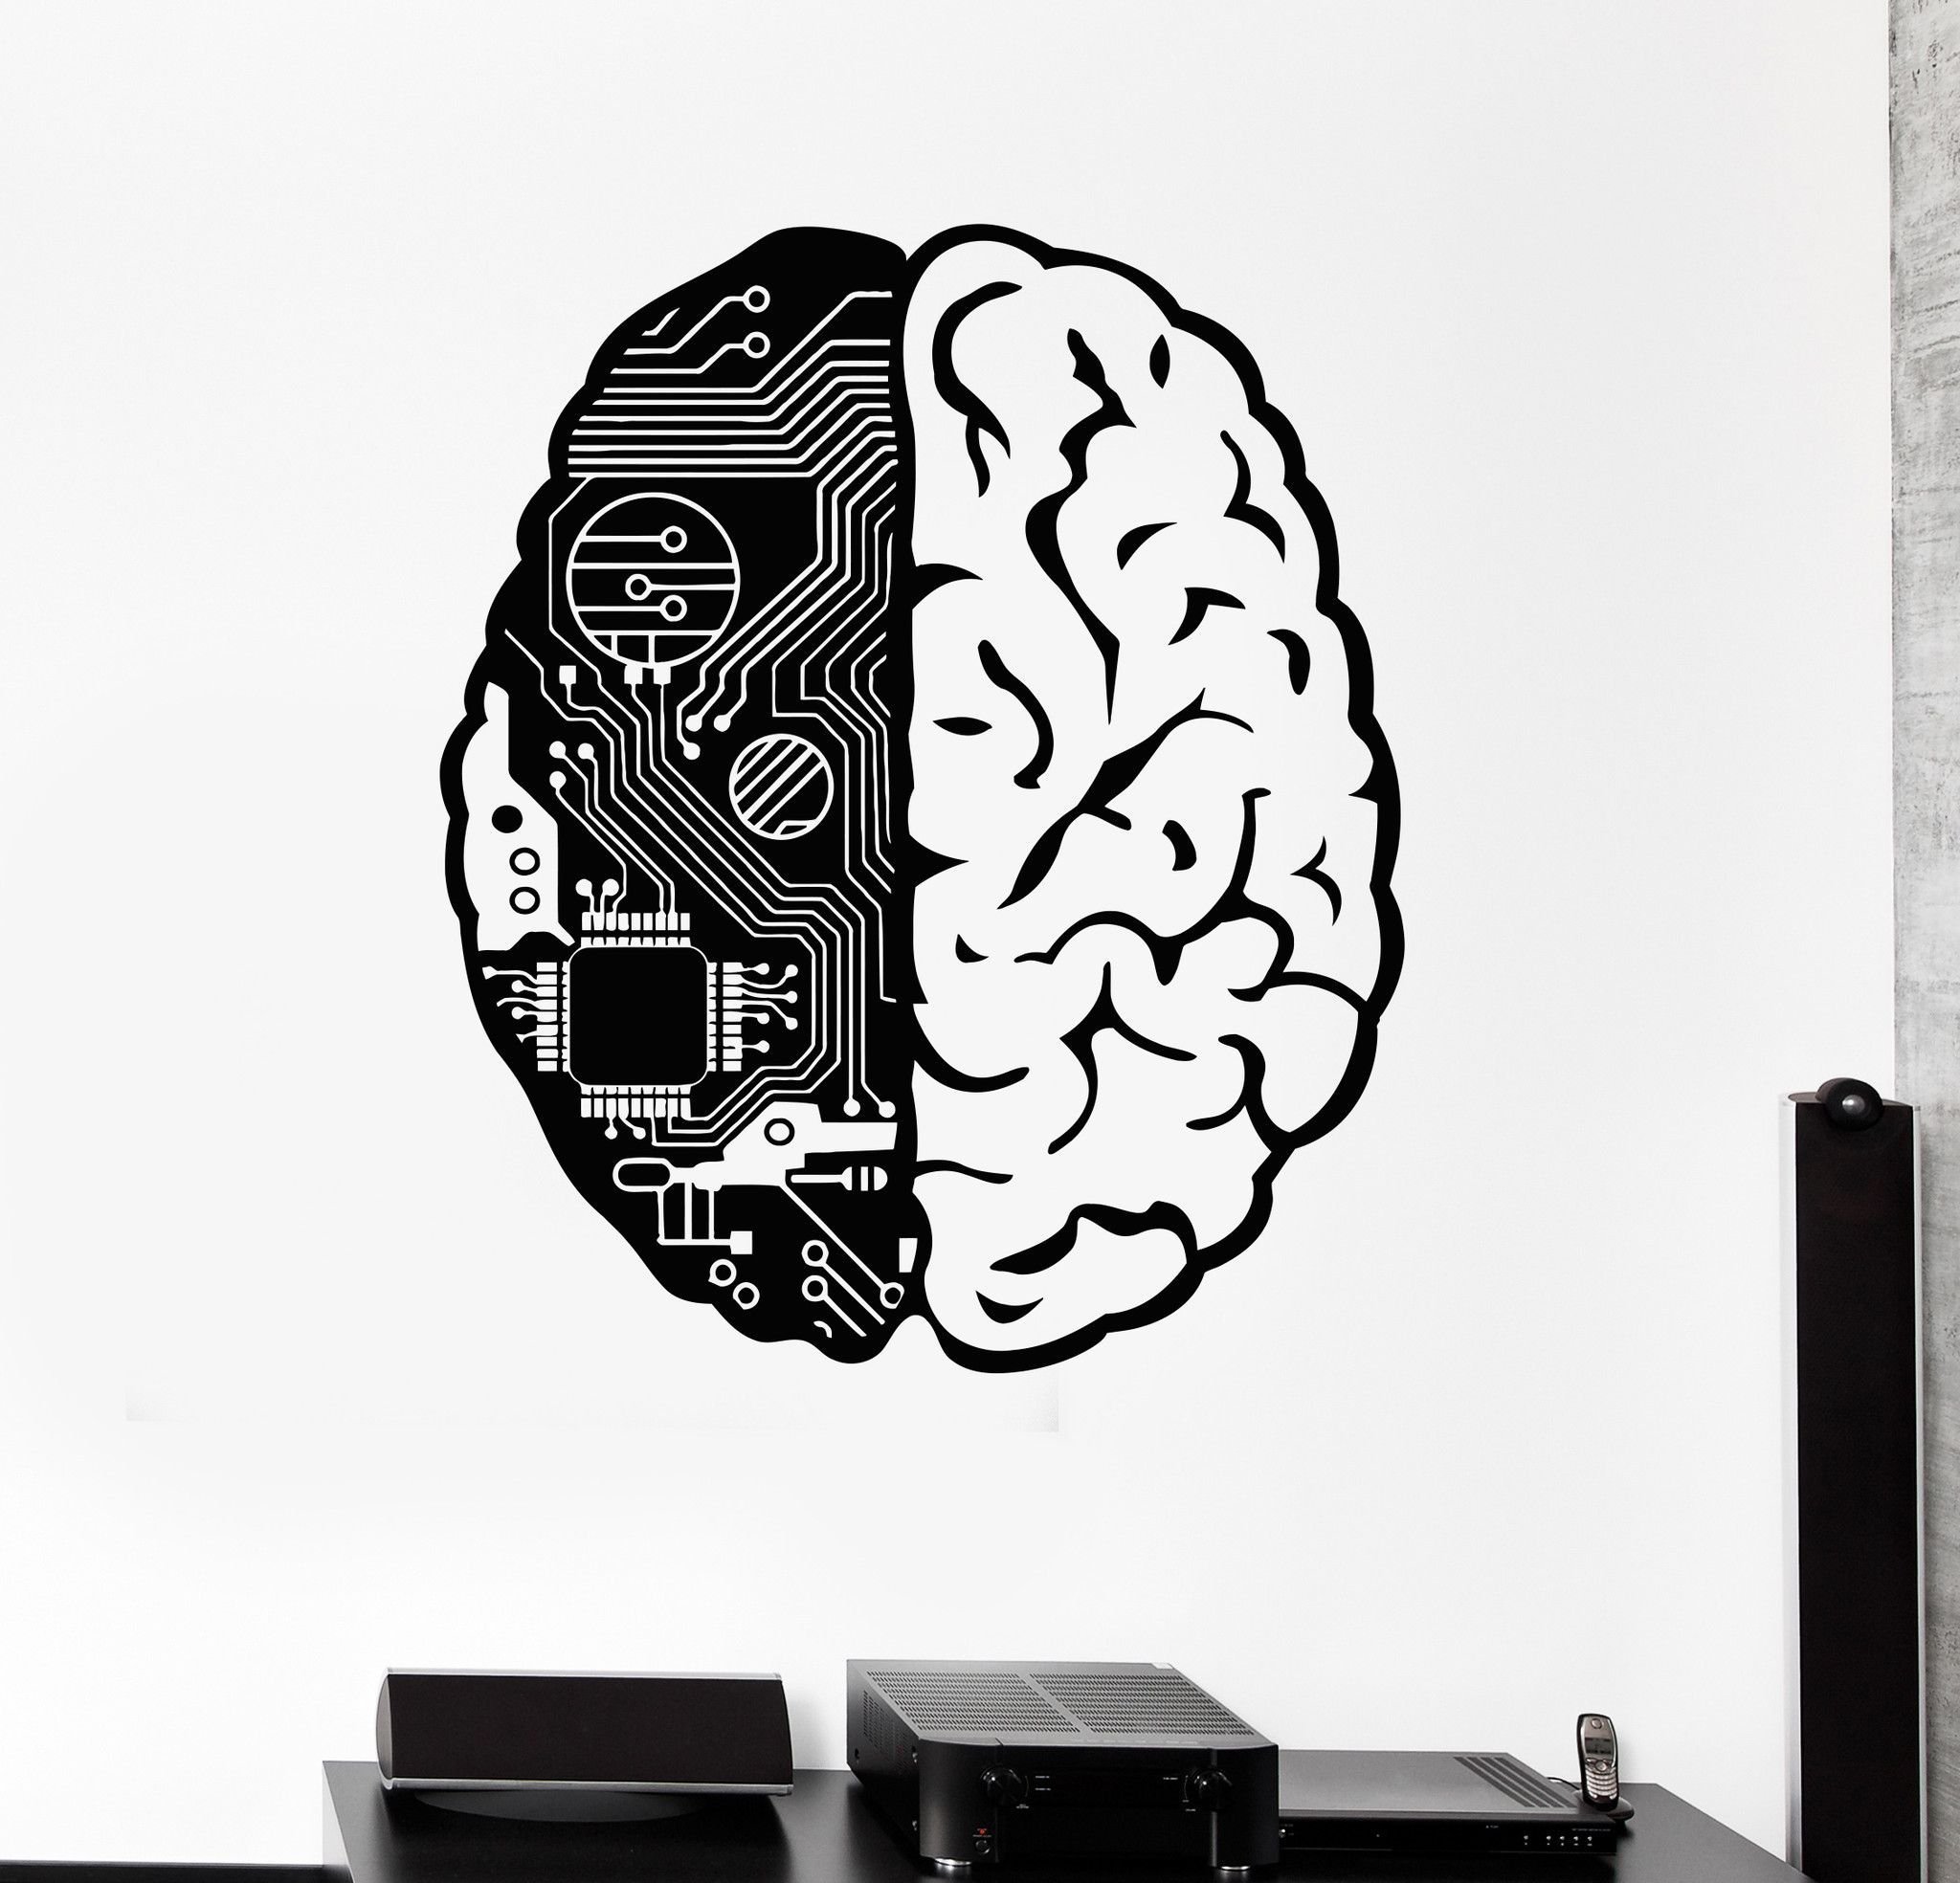 Code brains. Мозг картинка. Мозг наклейка. Мозг векторное изображение.